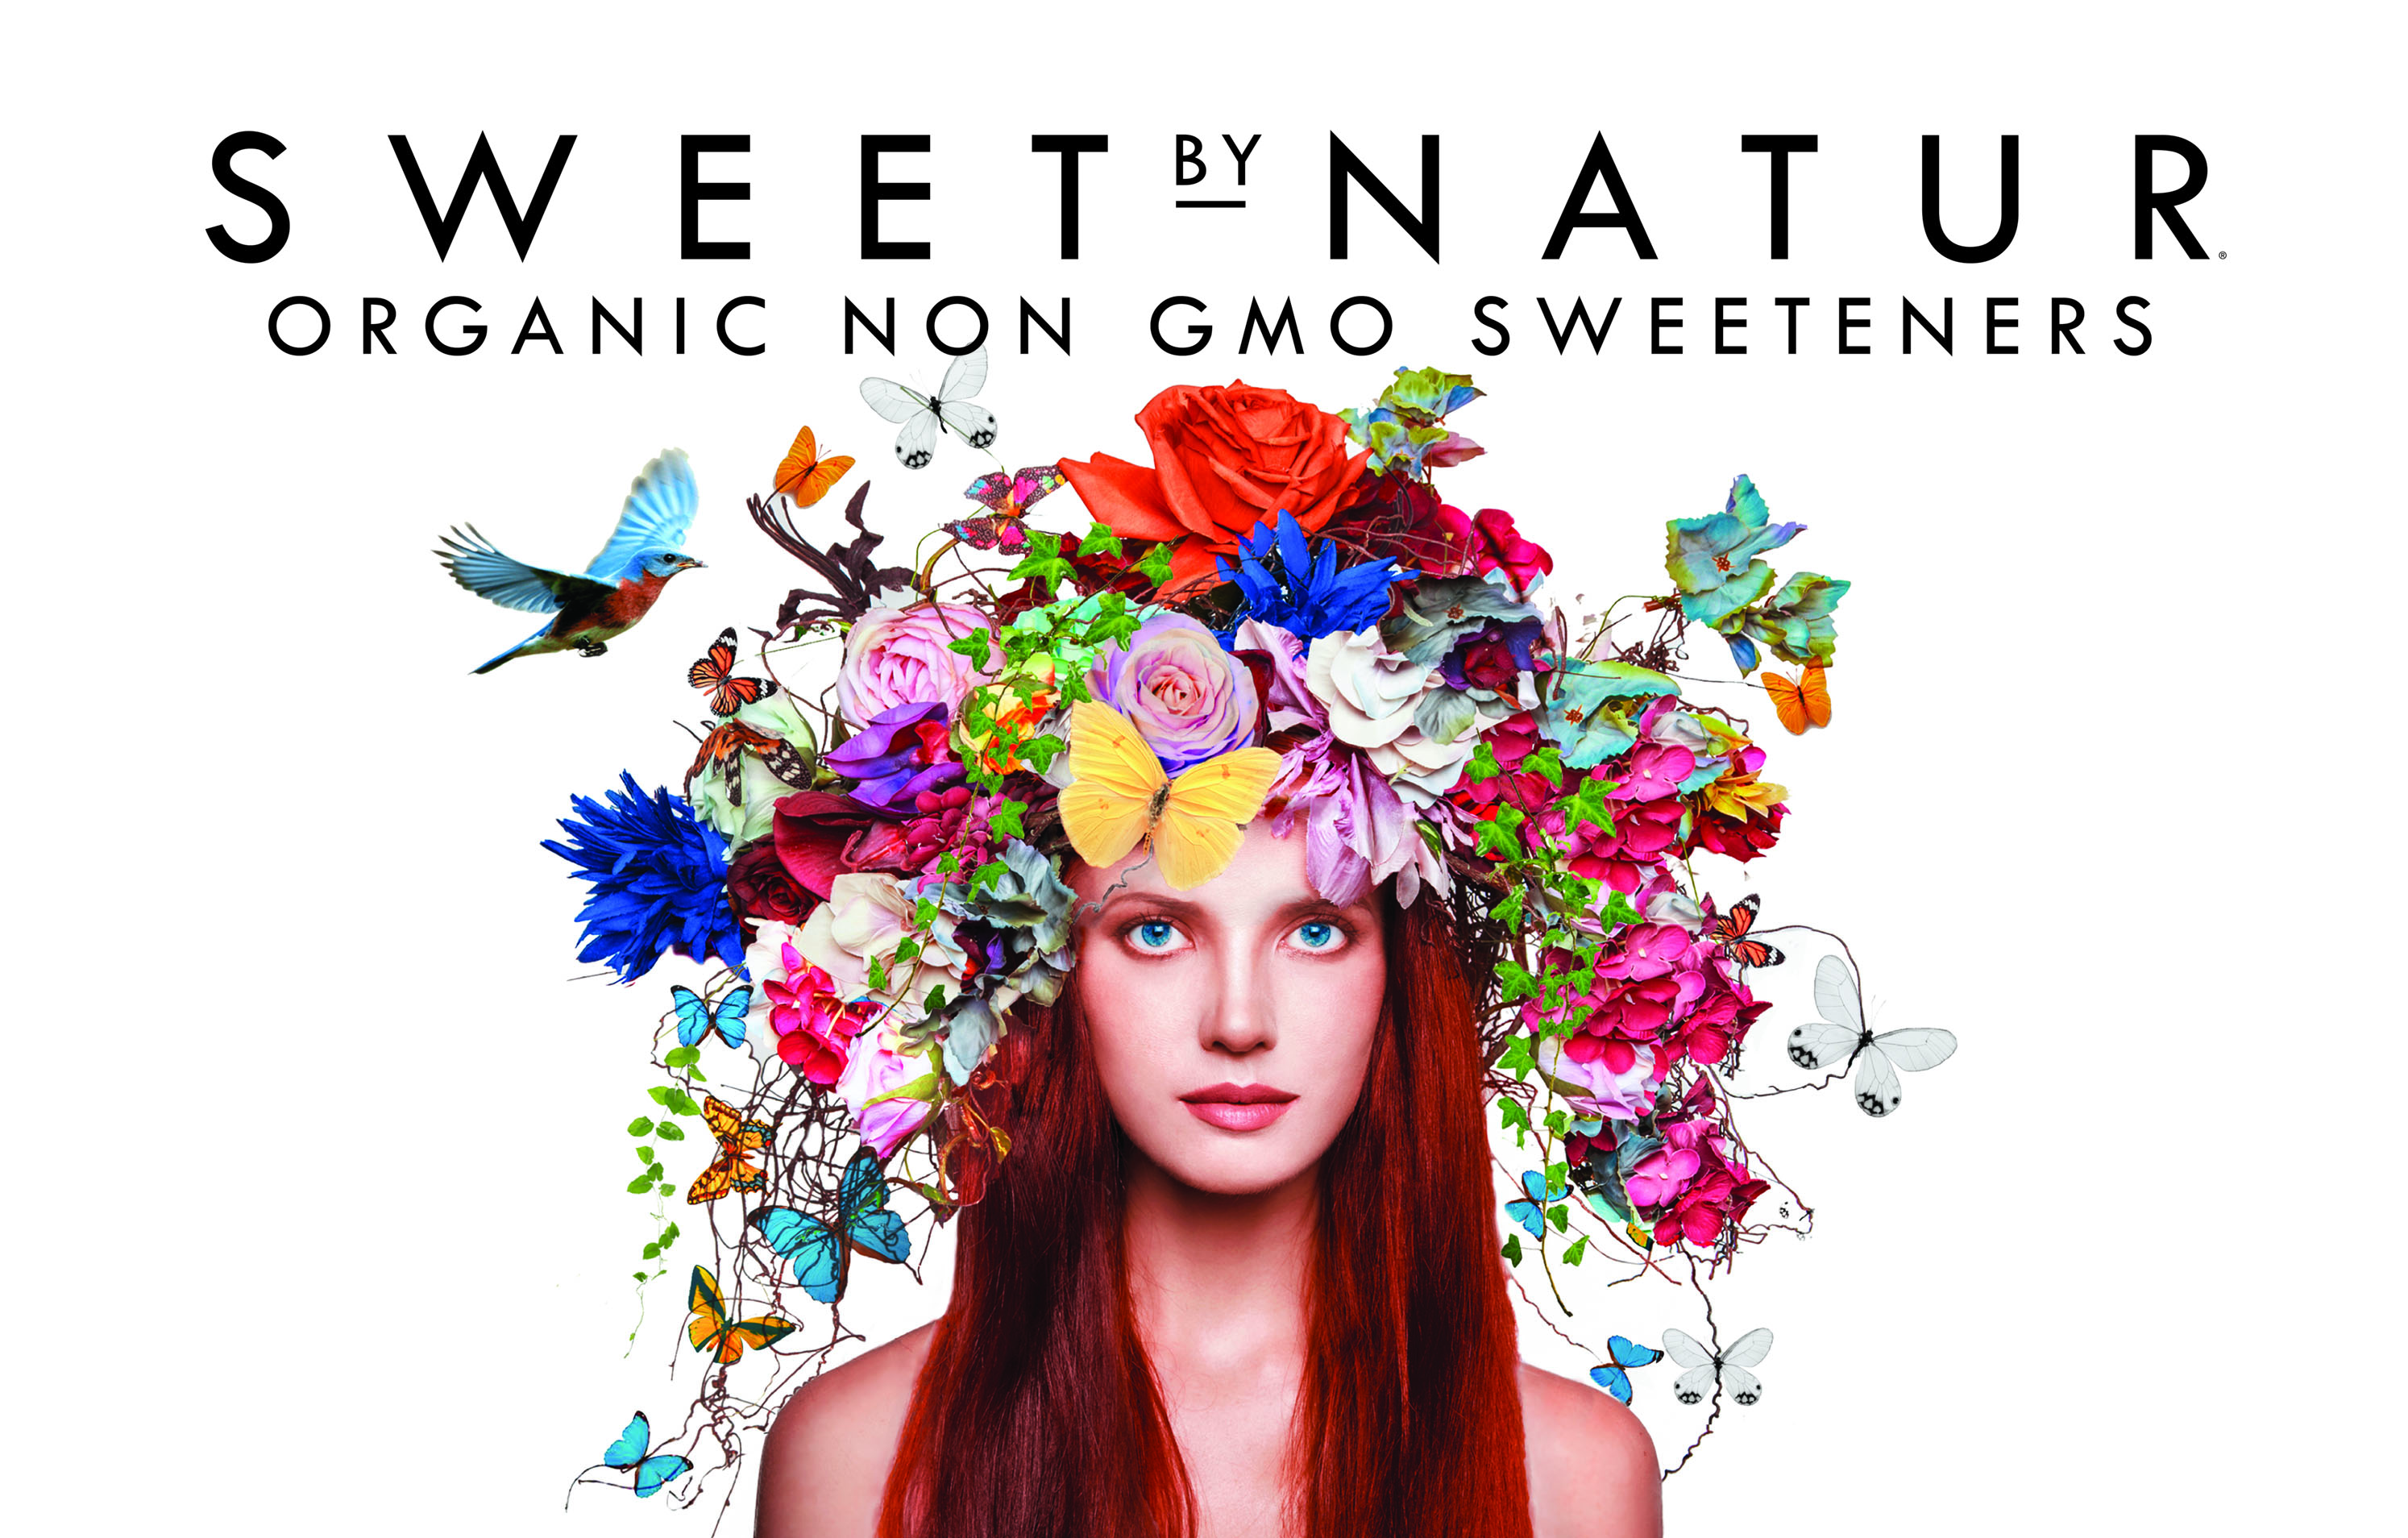 sweet by natur organic non gmo sweeteners